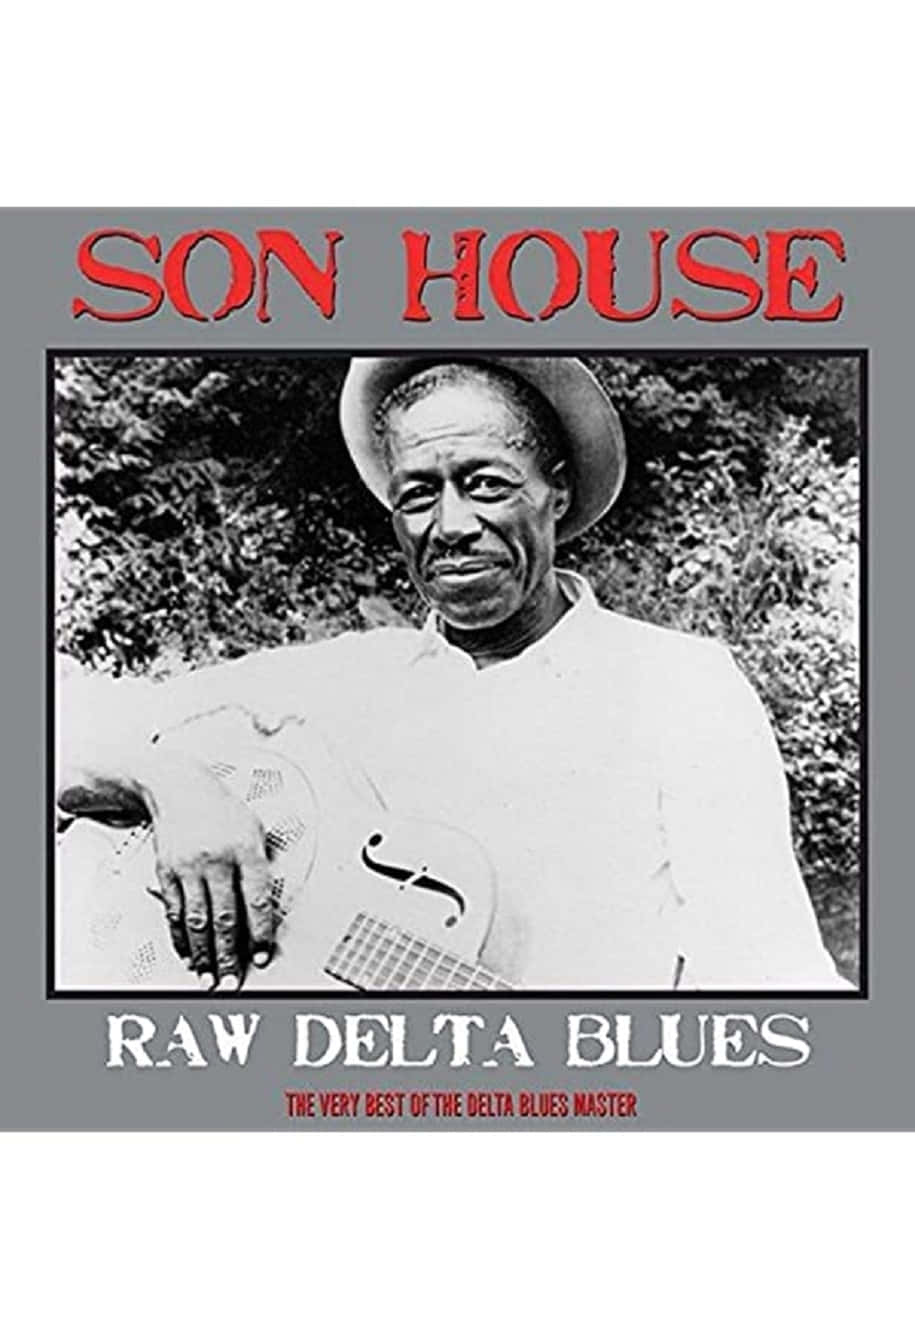 Son House Raw Delta Blues Album Art Wallpaper